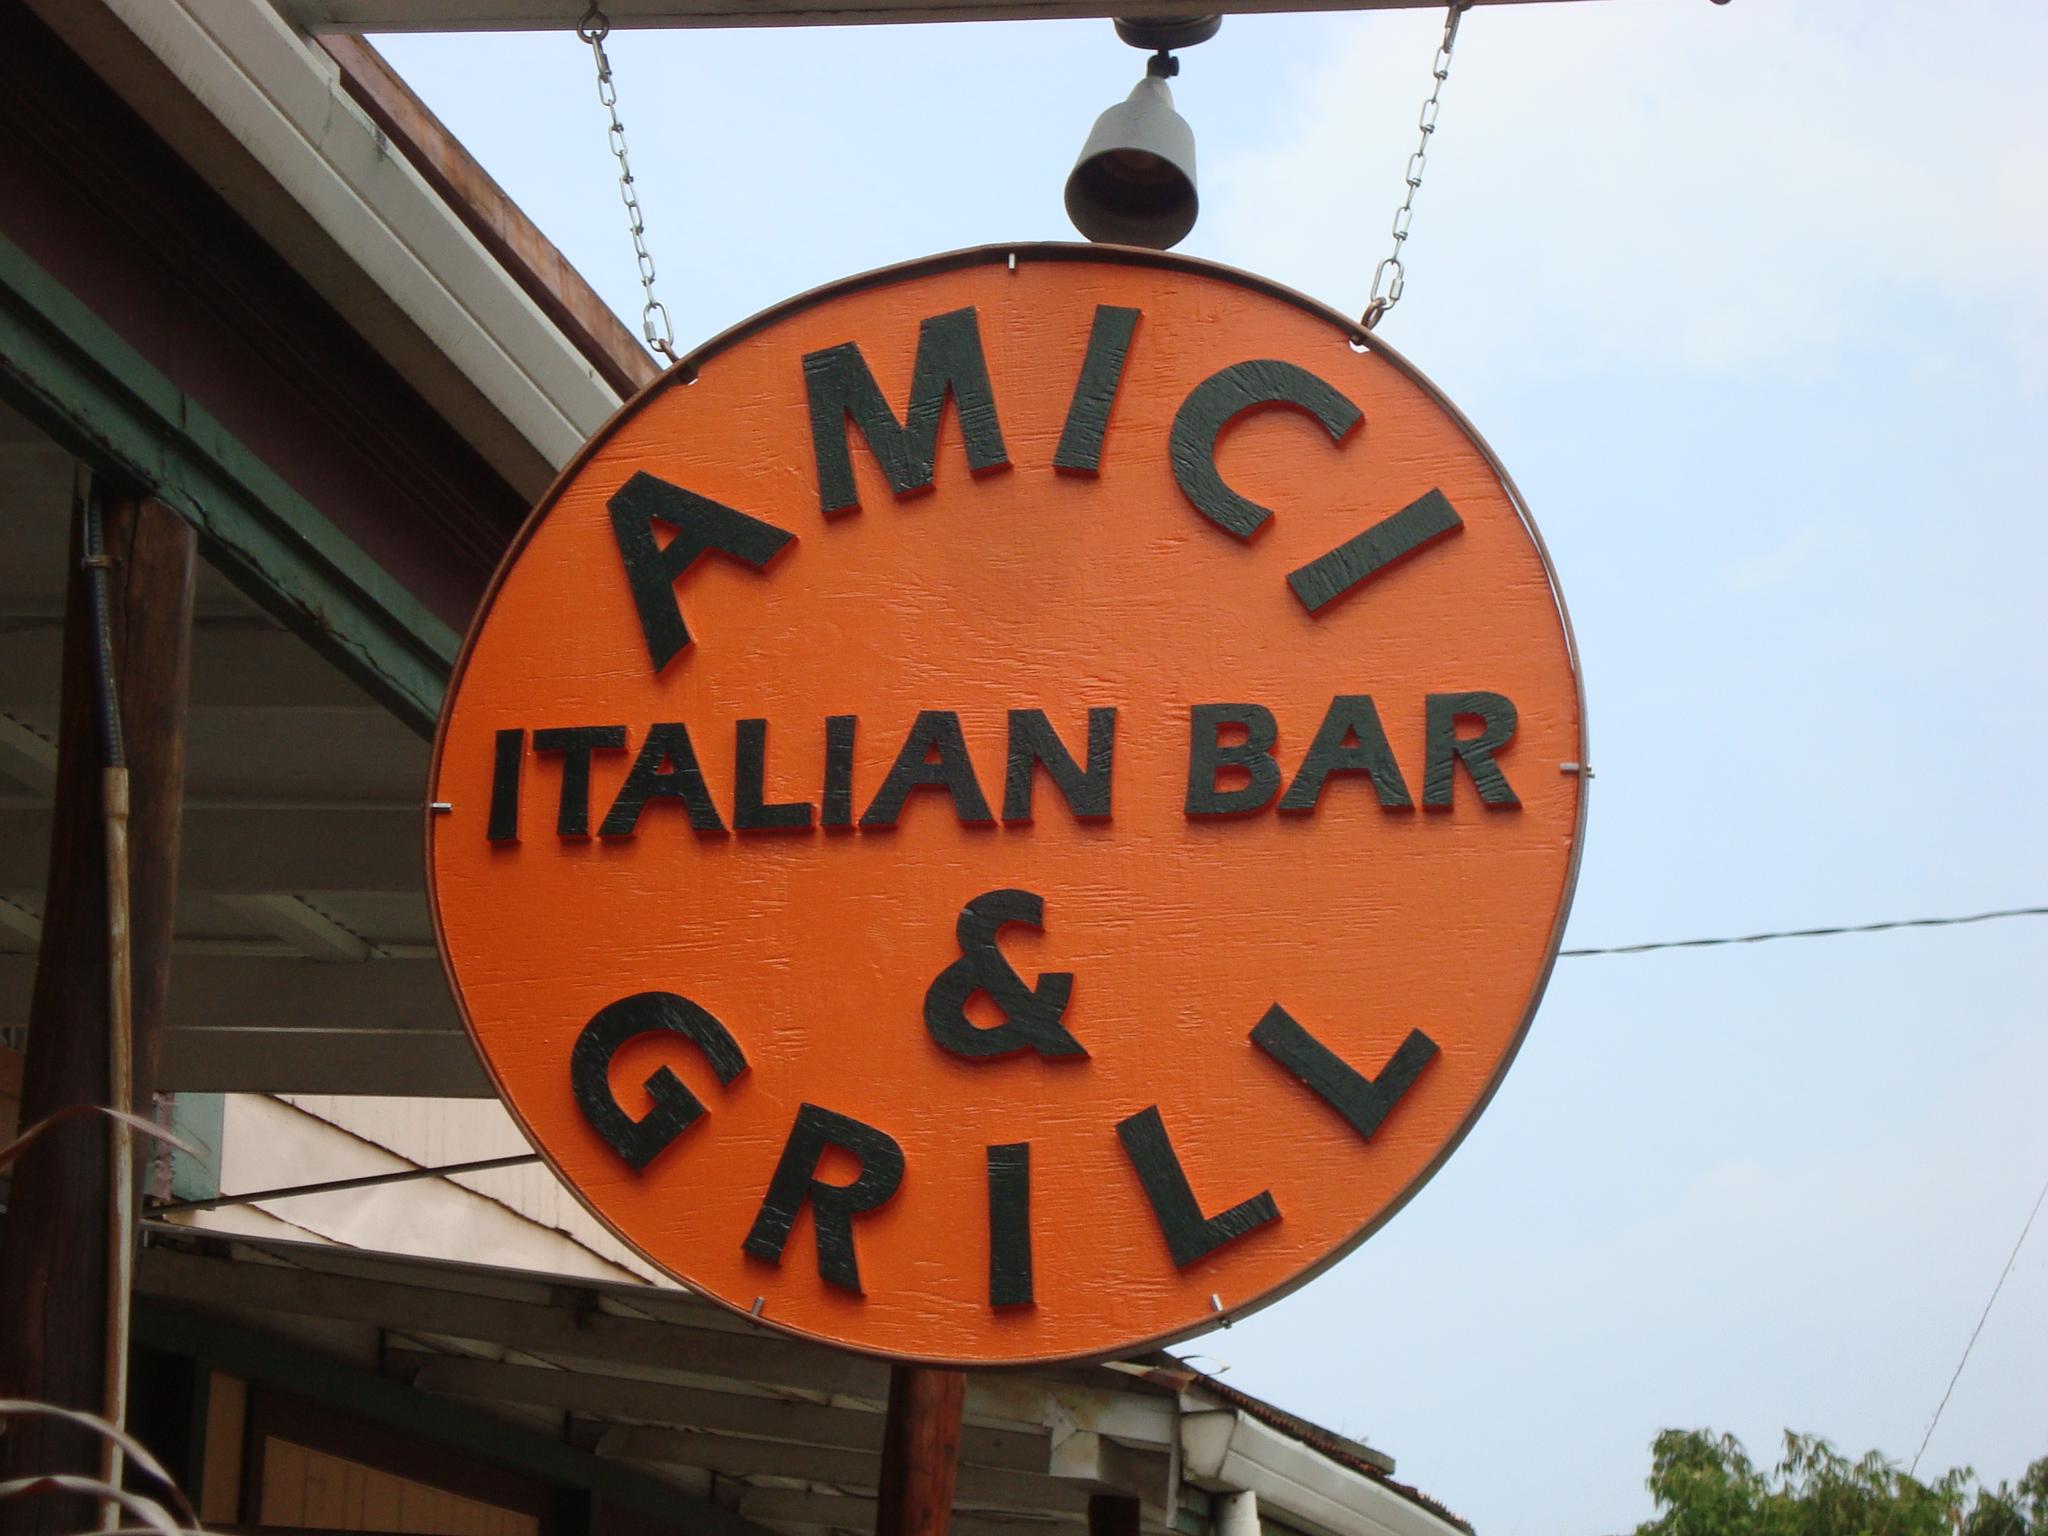 Amici’s Italian Bar and Grill